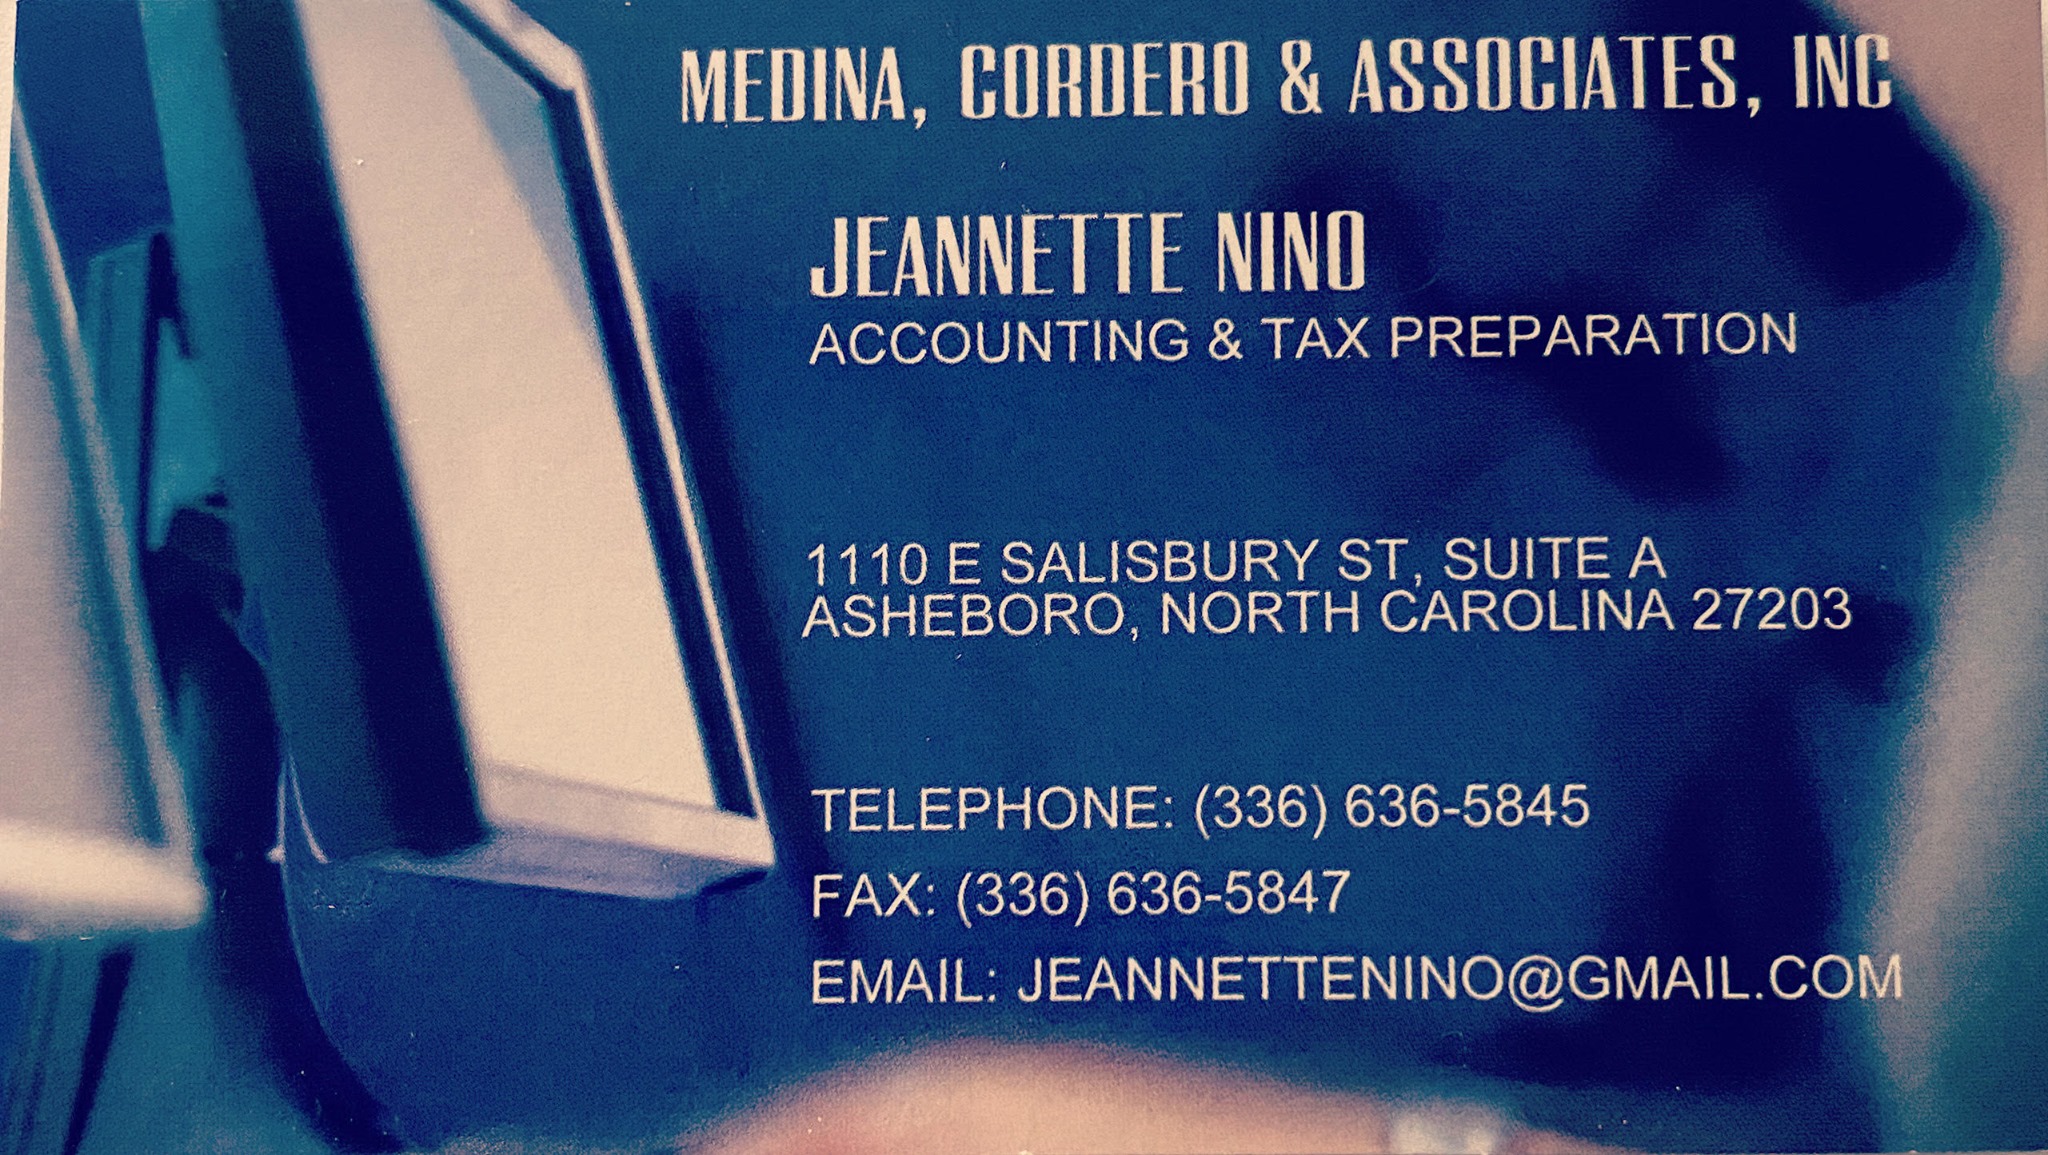 Medina, Cordero & Associates, Inc